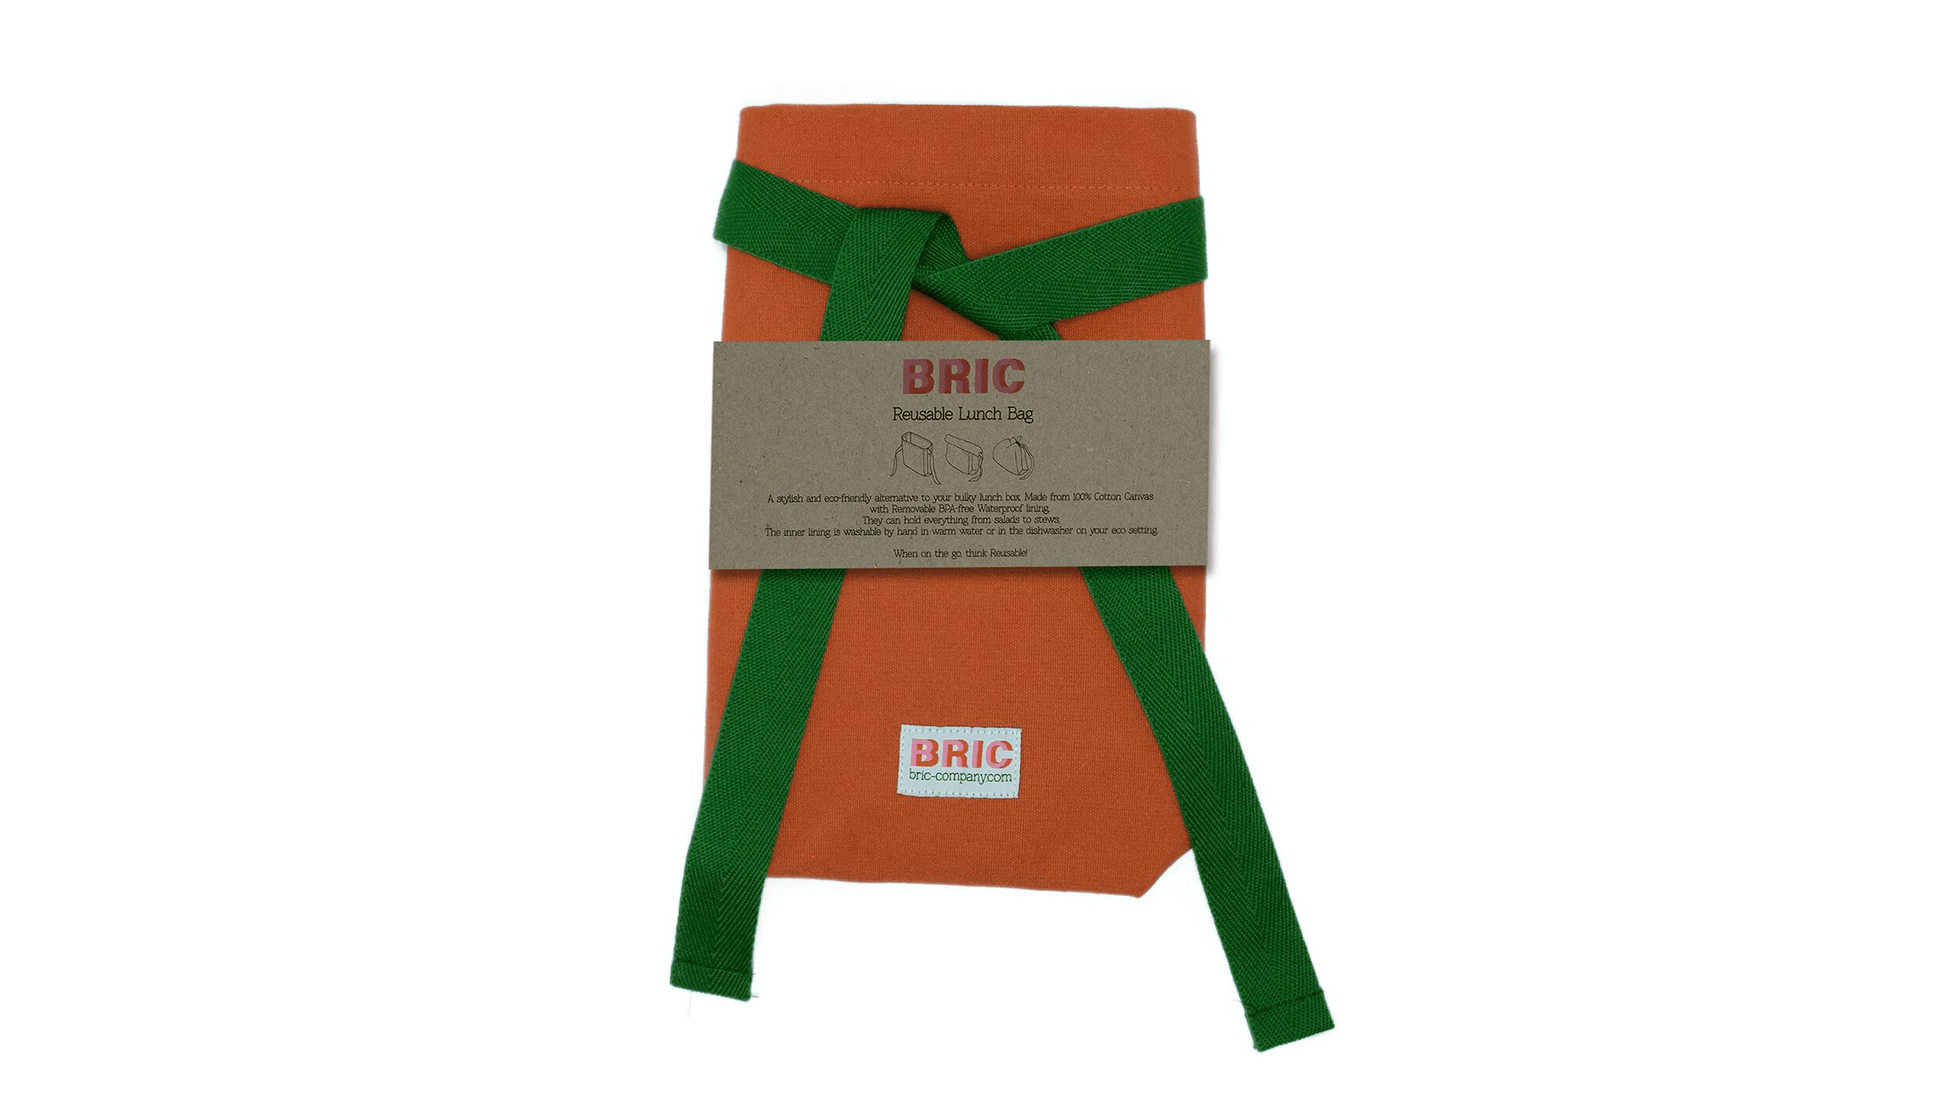 Bric Food bags / wraps burnt orange Reusable Lunch Bags - CLASSIC (various colours)